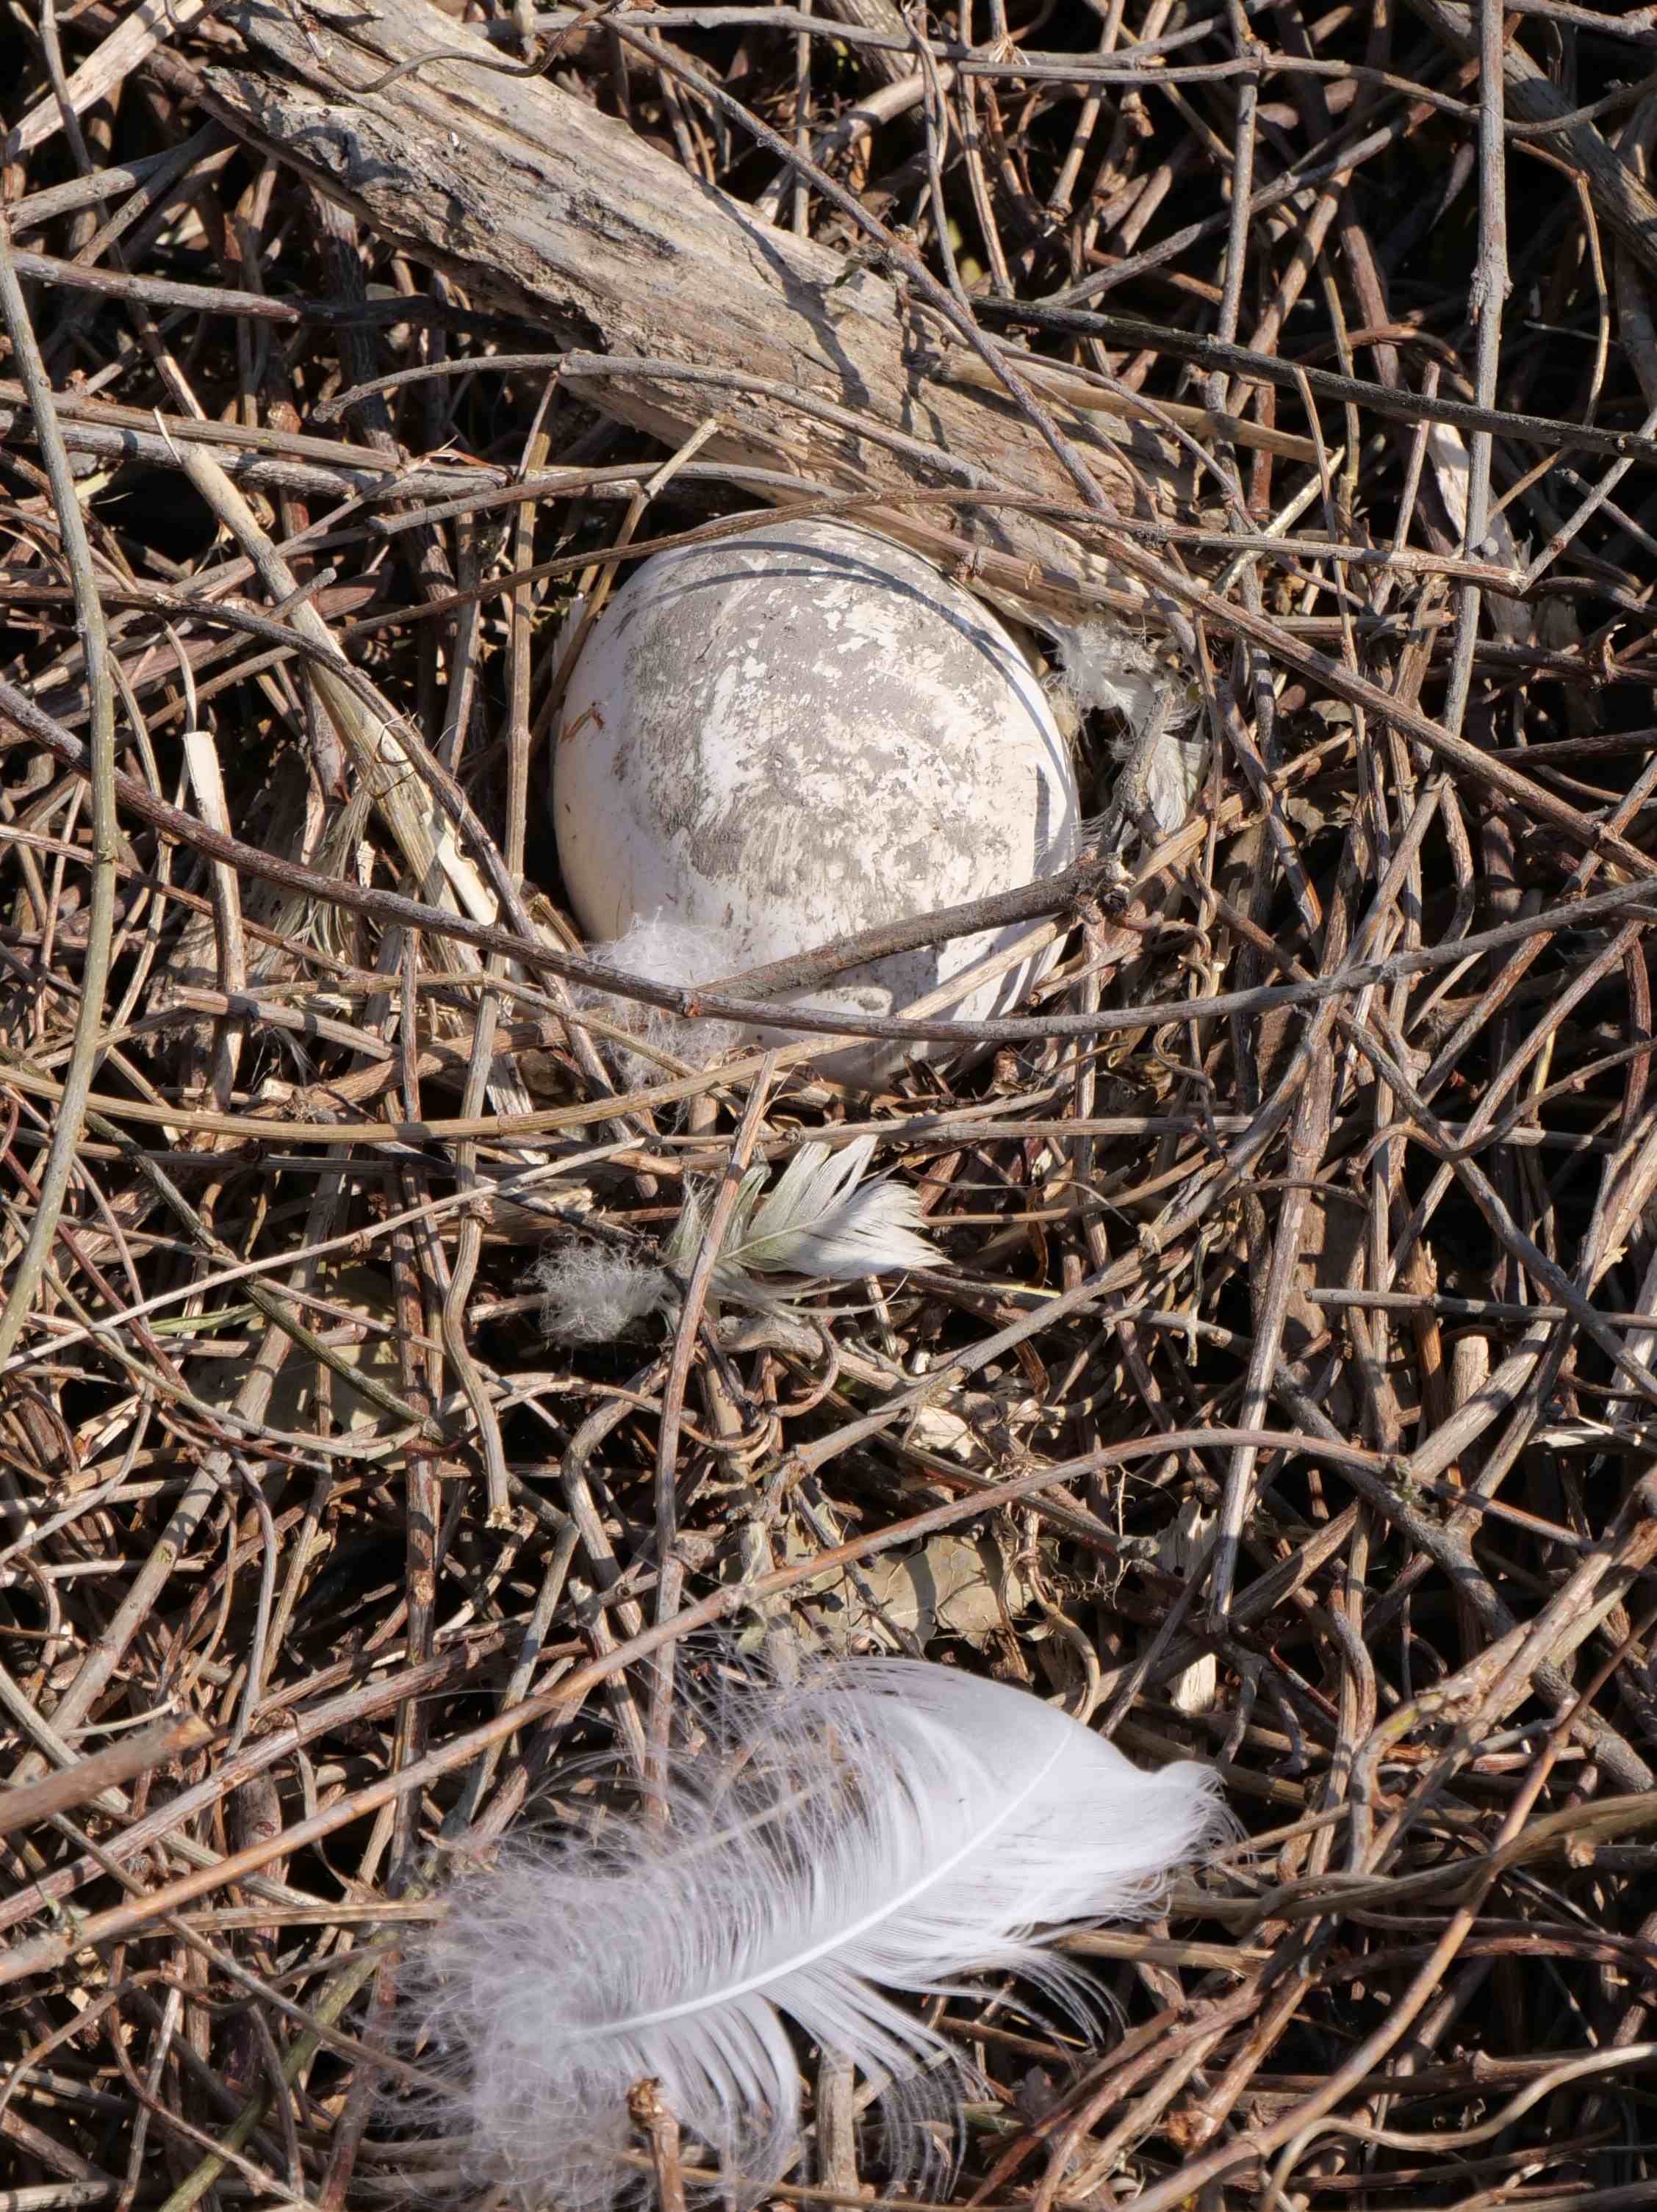 a swan egg